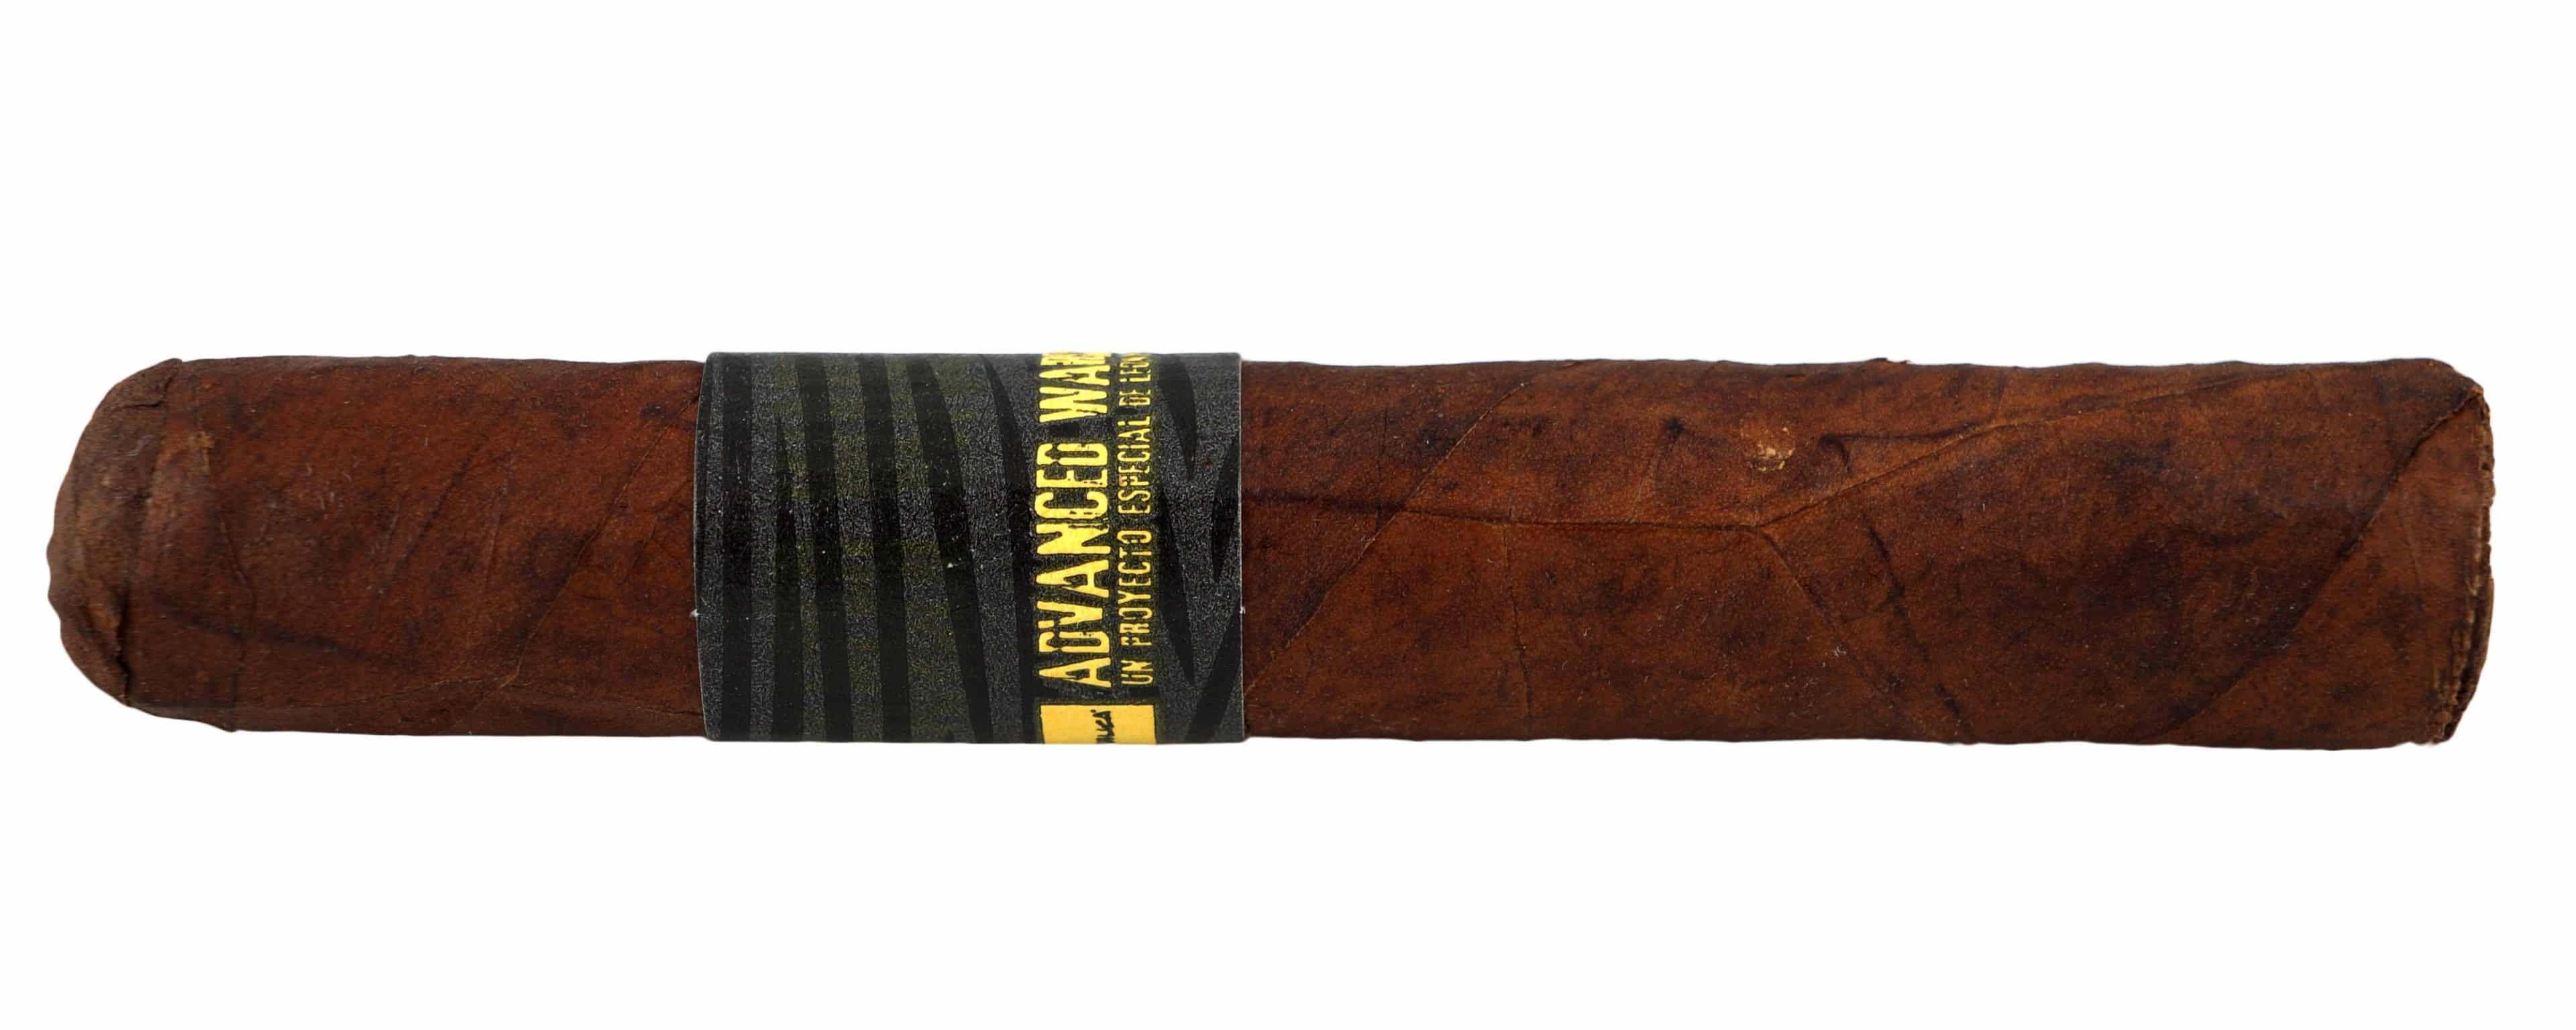 Blind Cigar Review: Viva Republica | Advanced Warfare Petit Corona